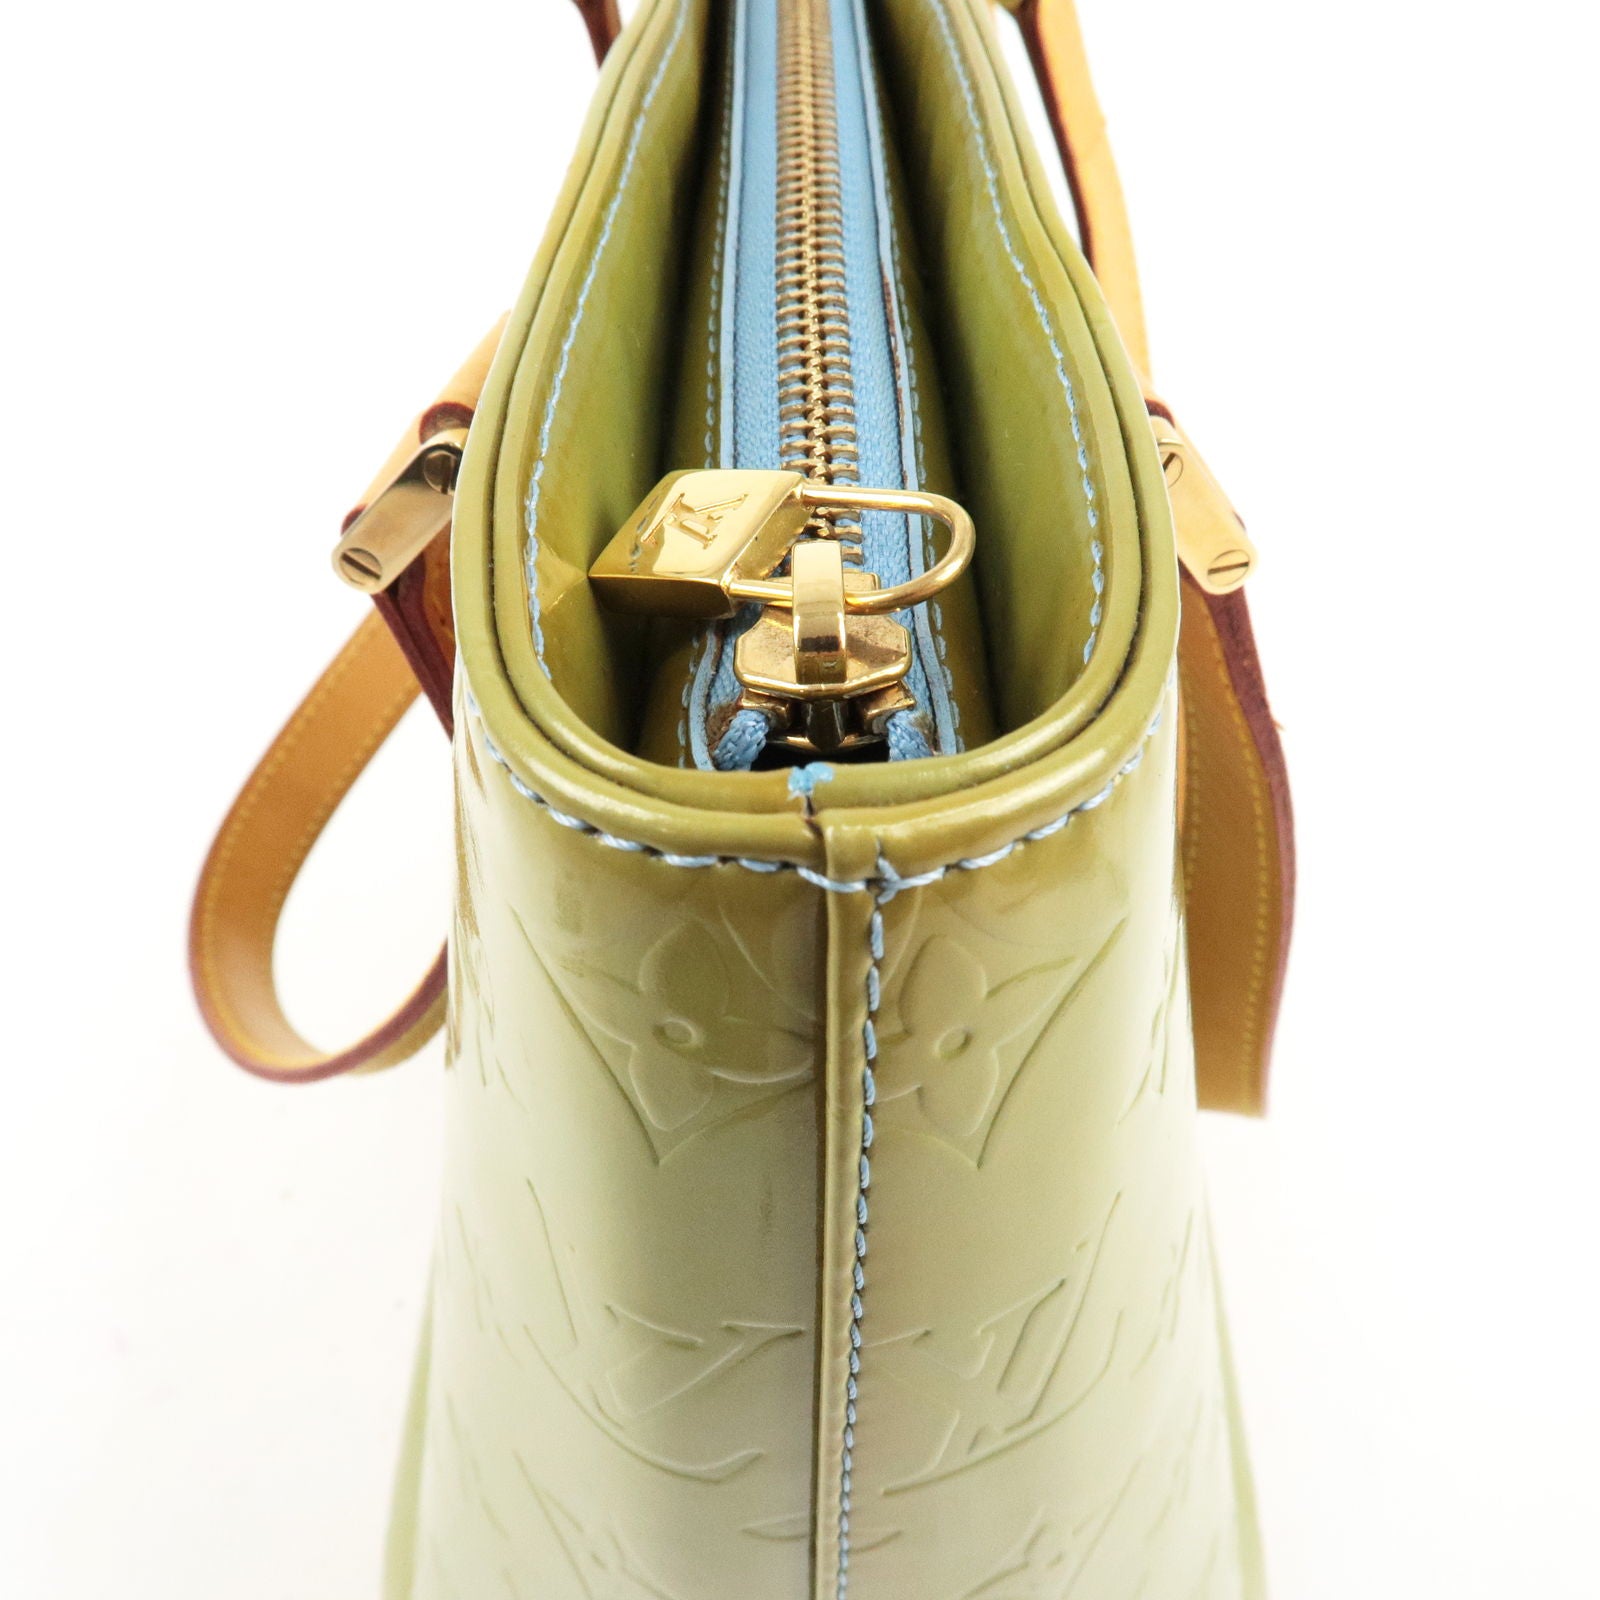 Louis Vuitton Houston Monogram Yellow/Gold Patent Leather Tote Shoulder Bag